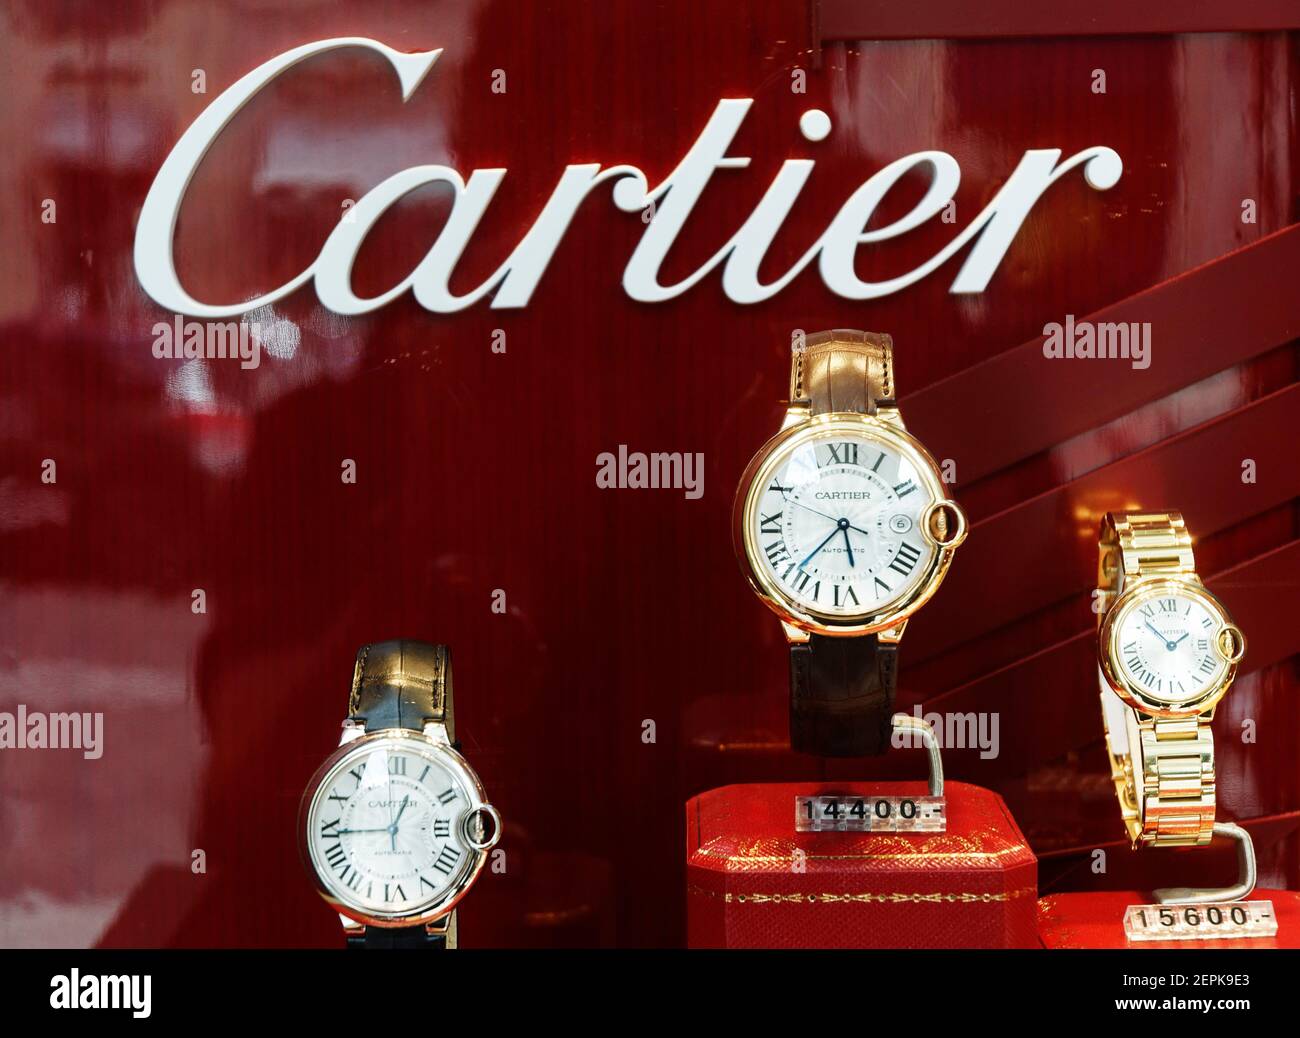 Orologi Cartier costosi in una vetrina a Parigi, Francia Foto stock - Alamy